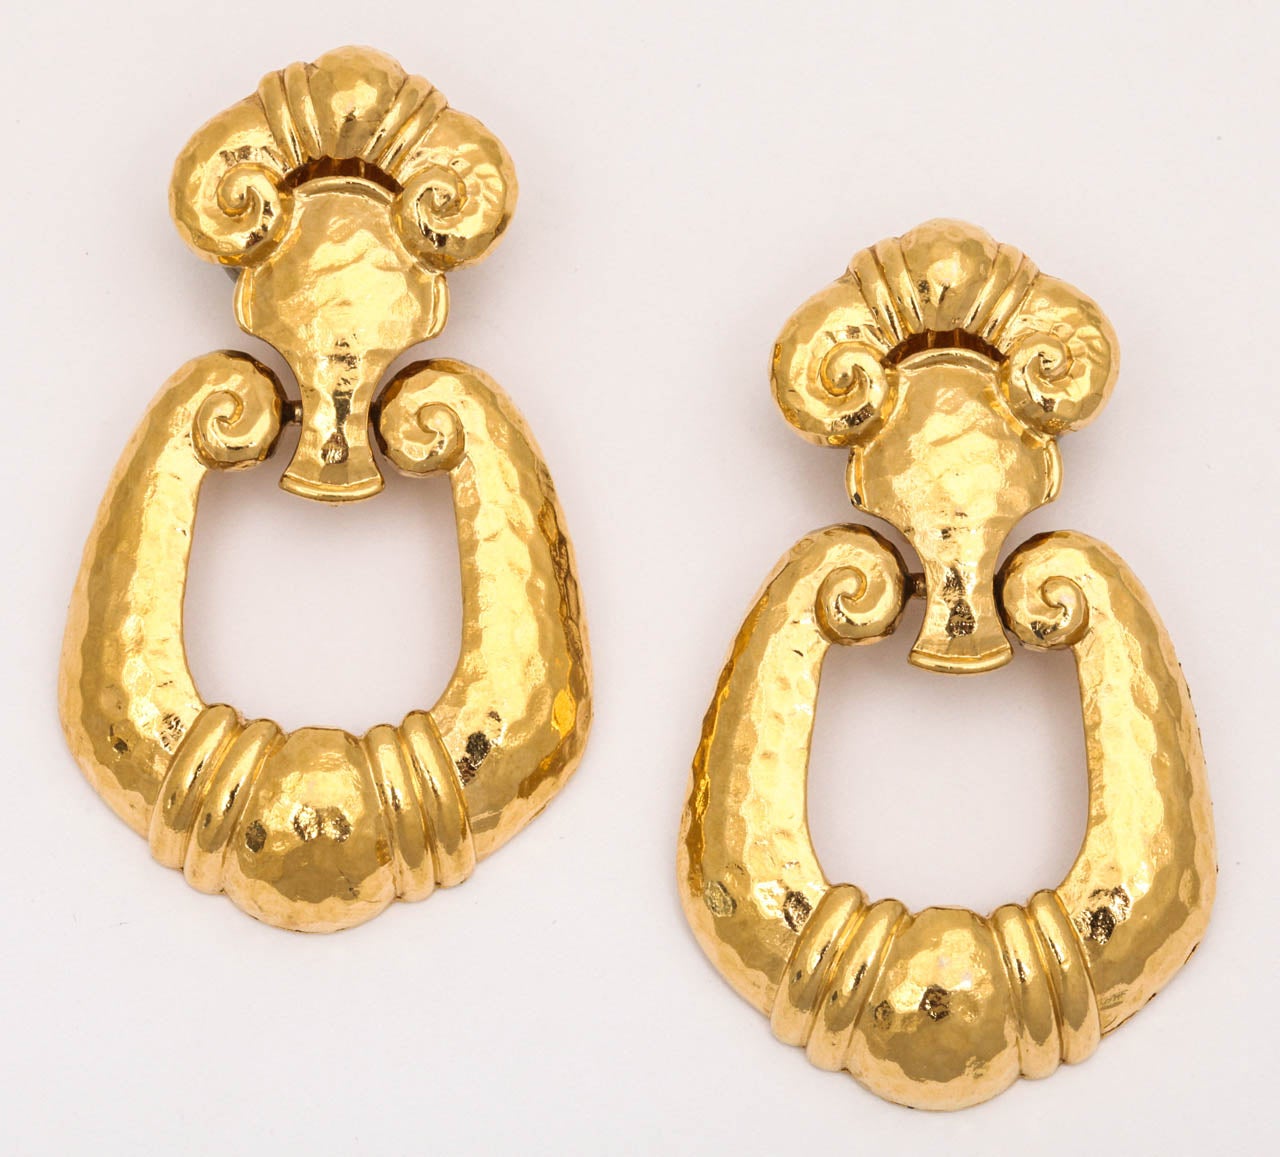 Large hammered gold tone door knocker earrings marked Barrera for Avon.